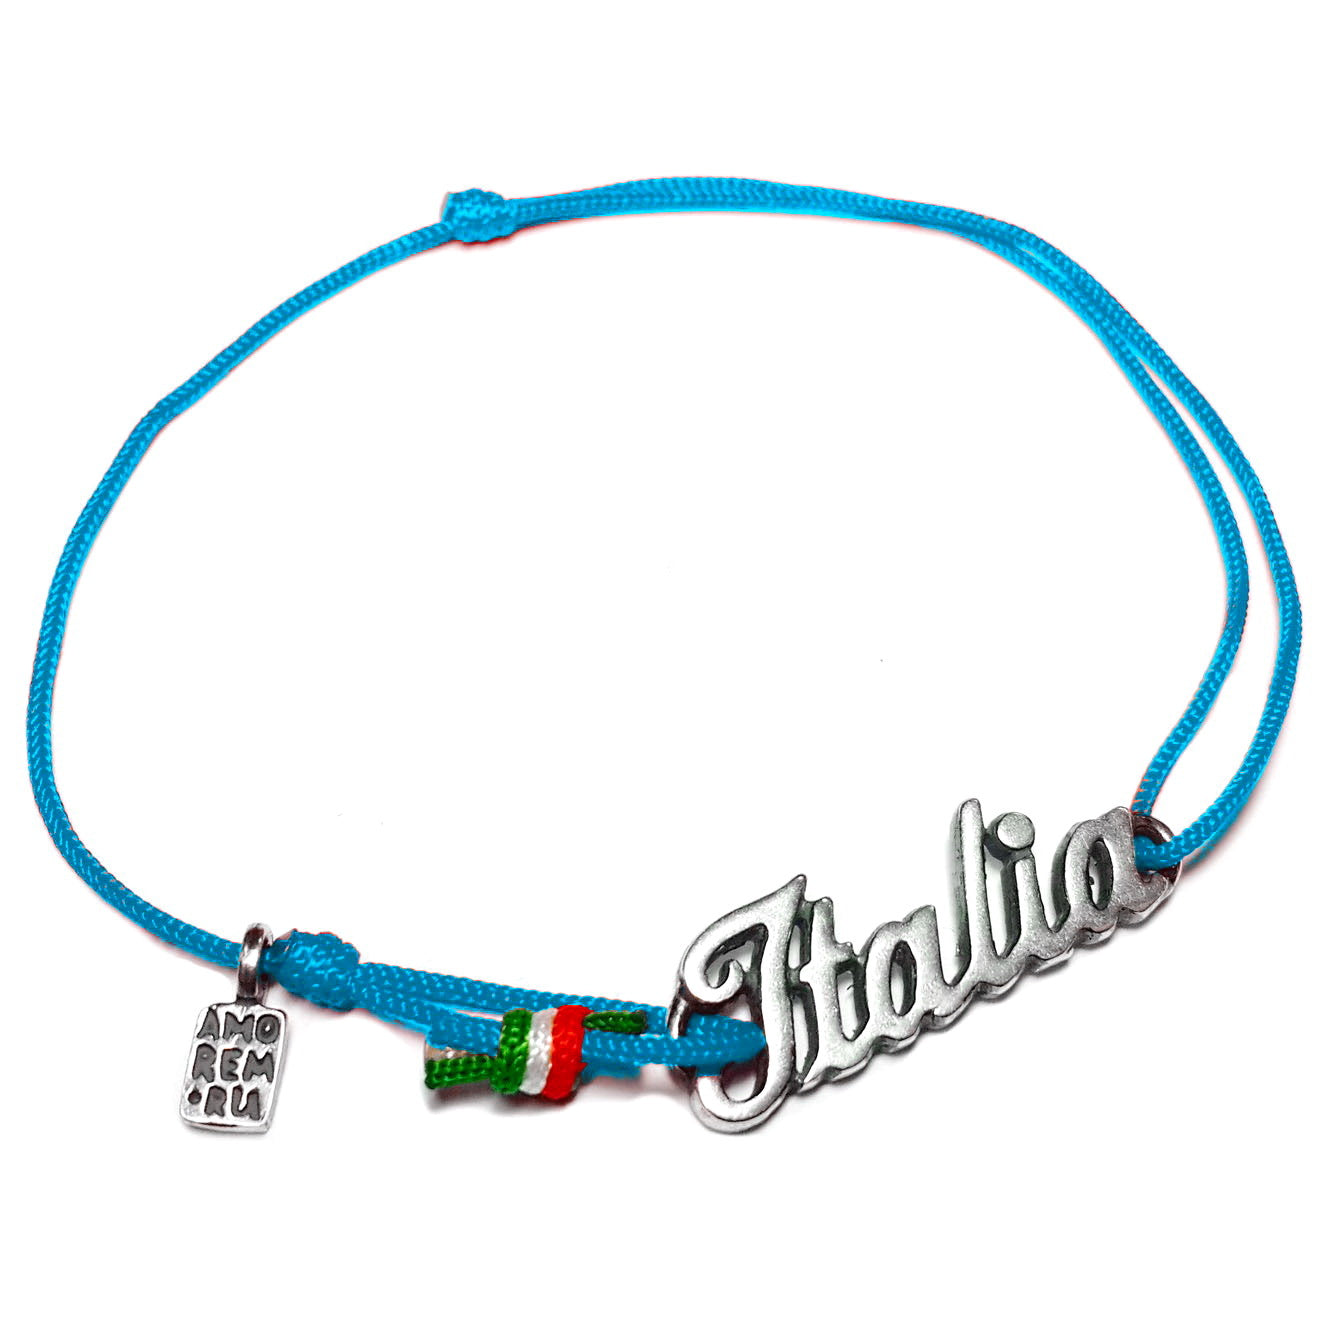 Italy Bracelet, sterling silver charm